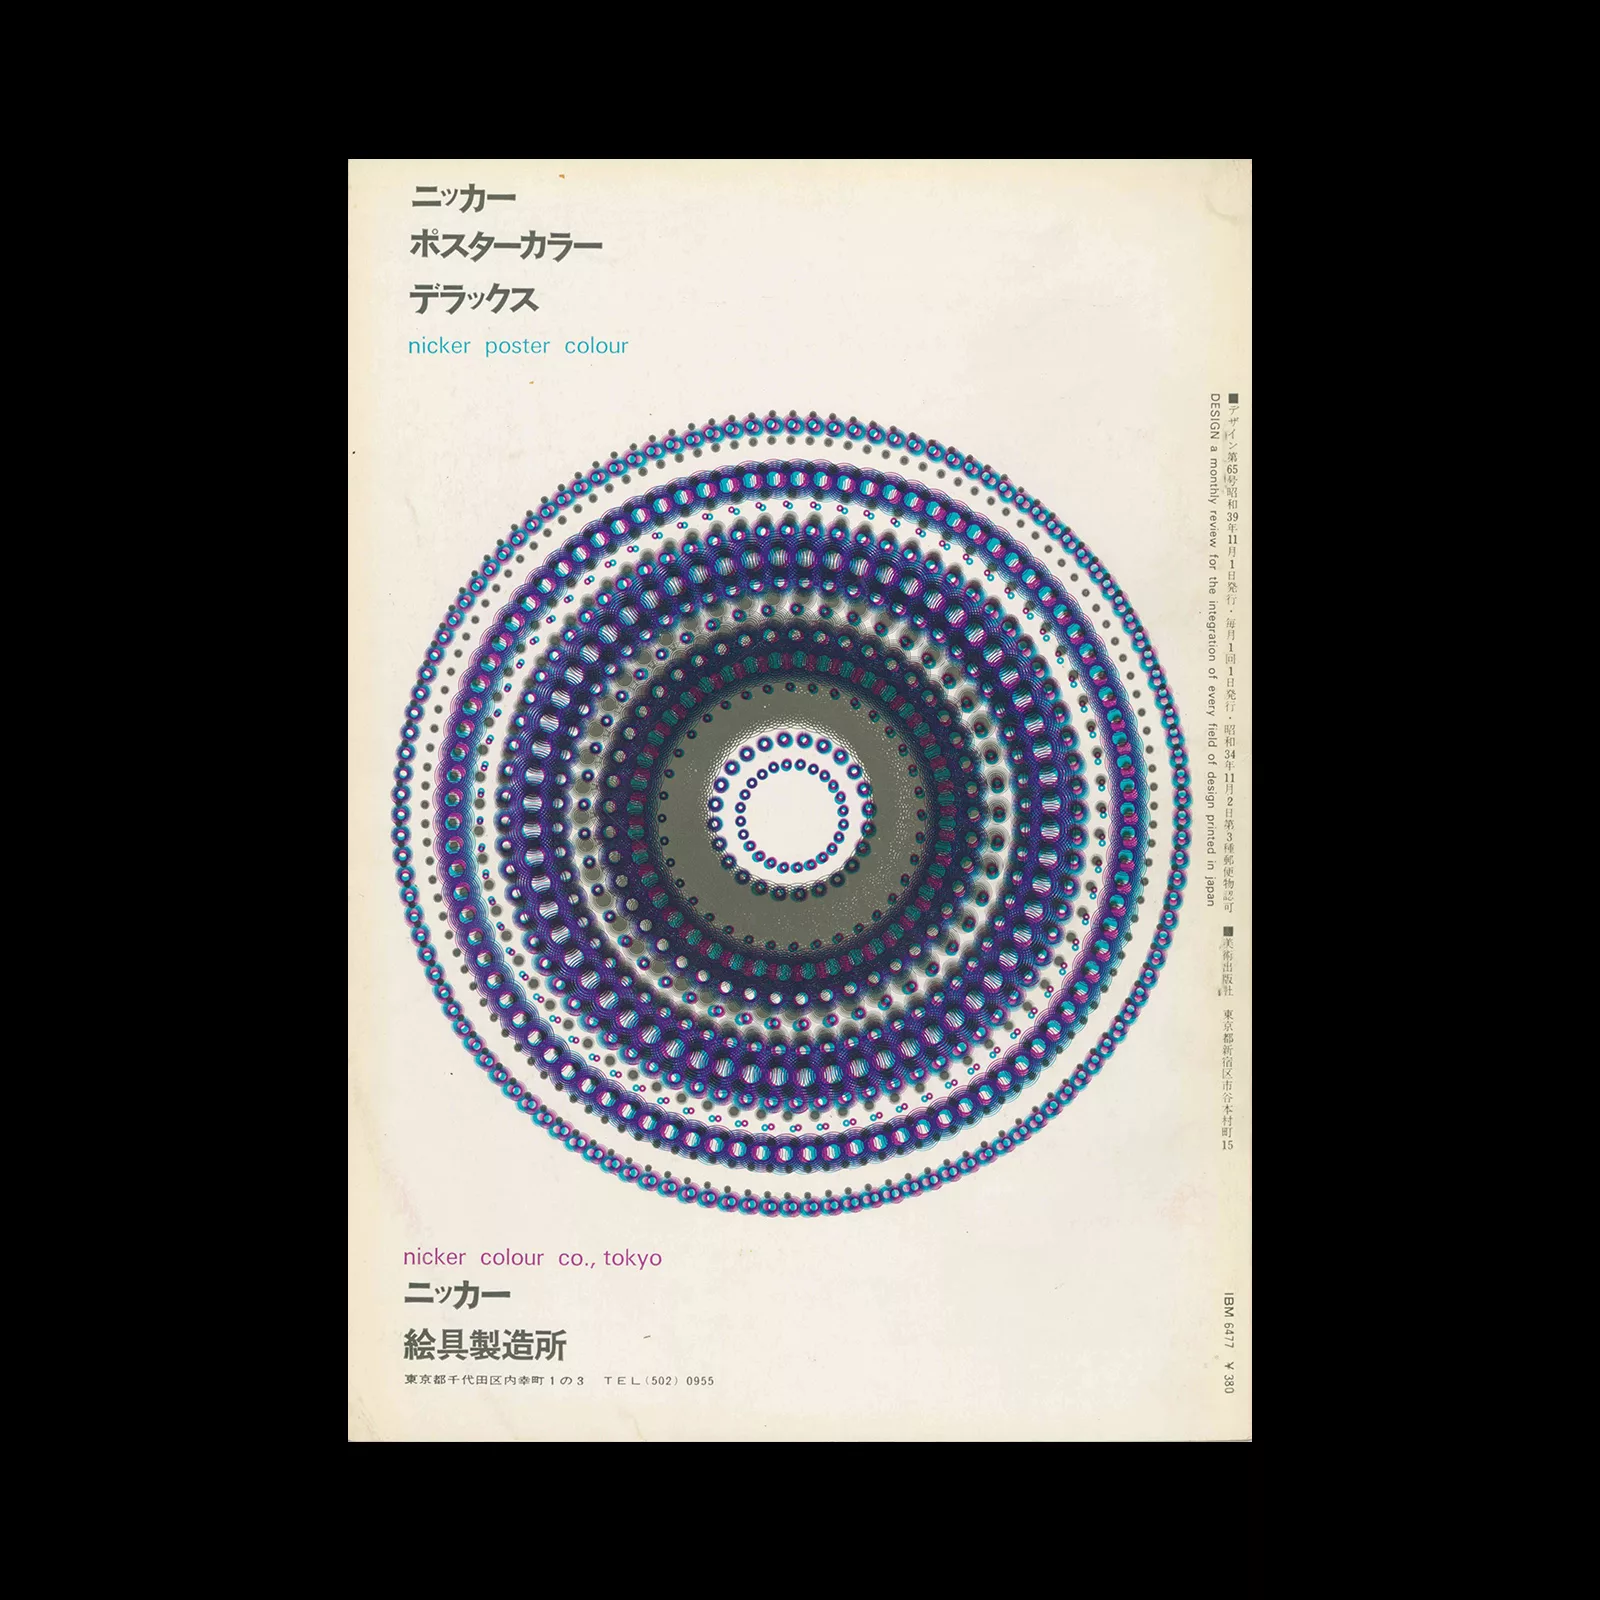 Design (Japan), 65, 1964. Cover design by Kohei Sugiura